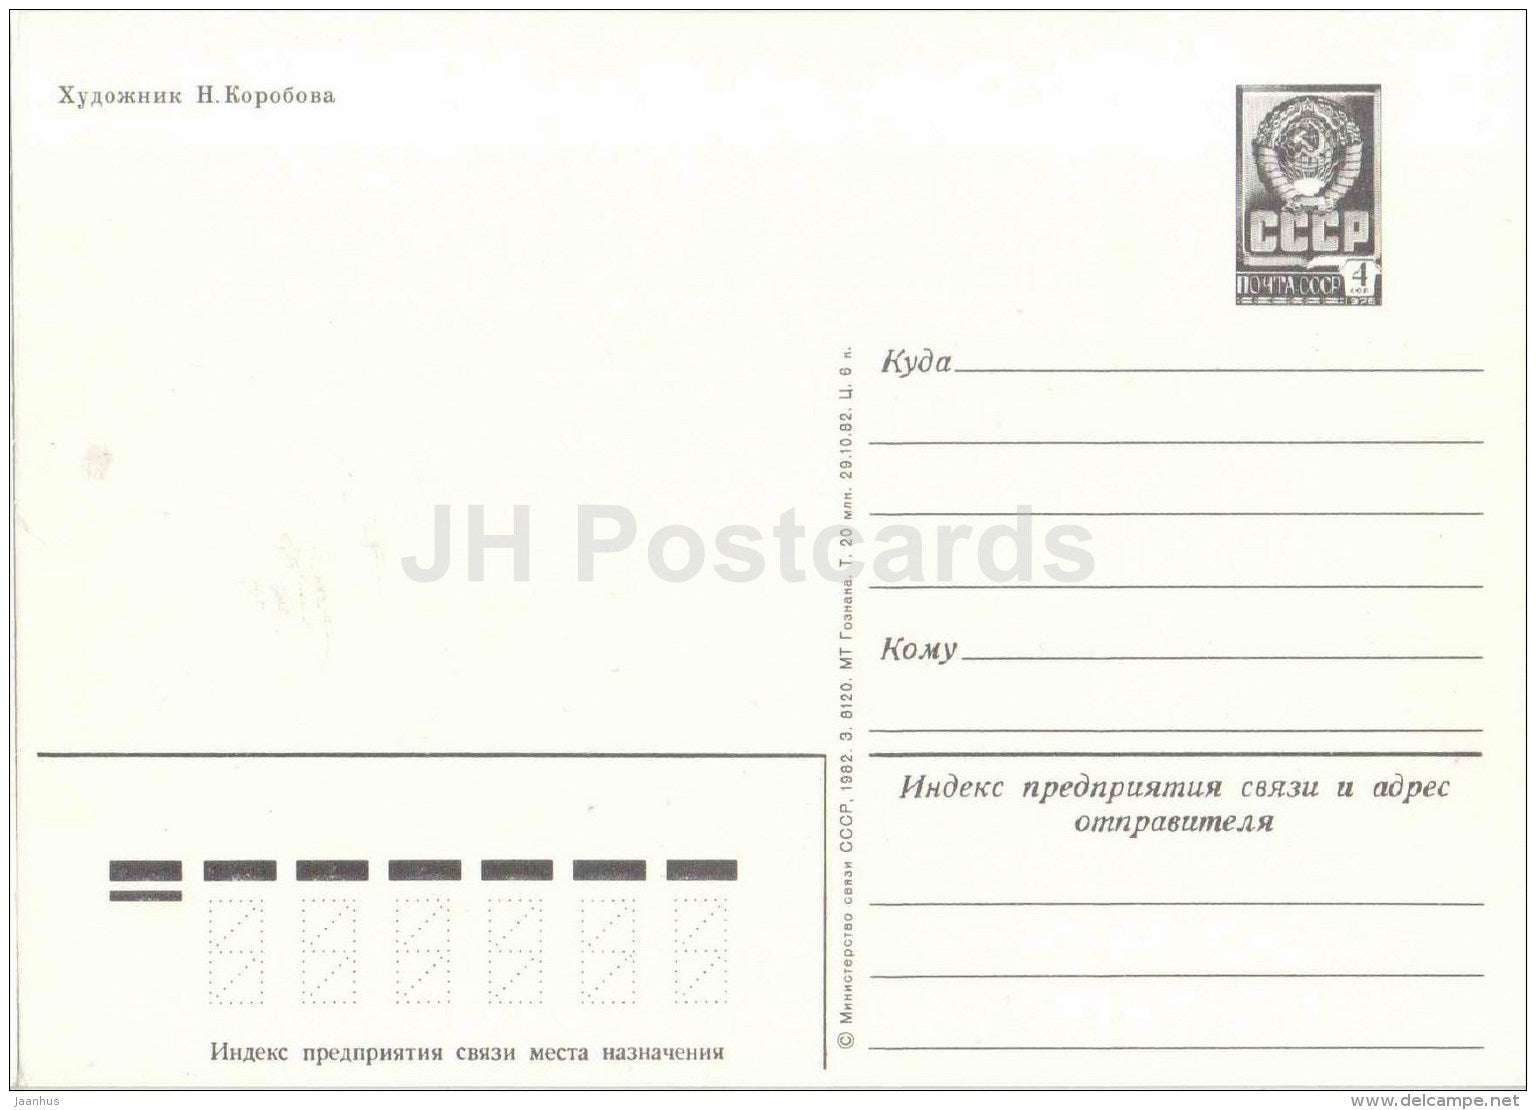 New Year Greeting Card by N. Korobova - clock - postal stationery - 1982 - Russia USSR - unused - JH Postcards